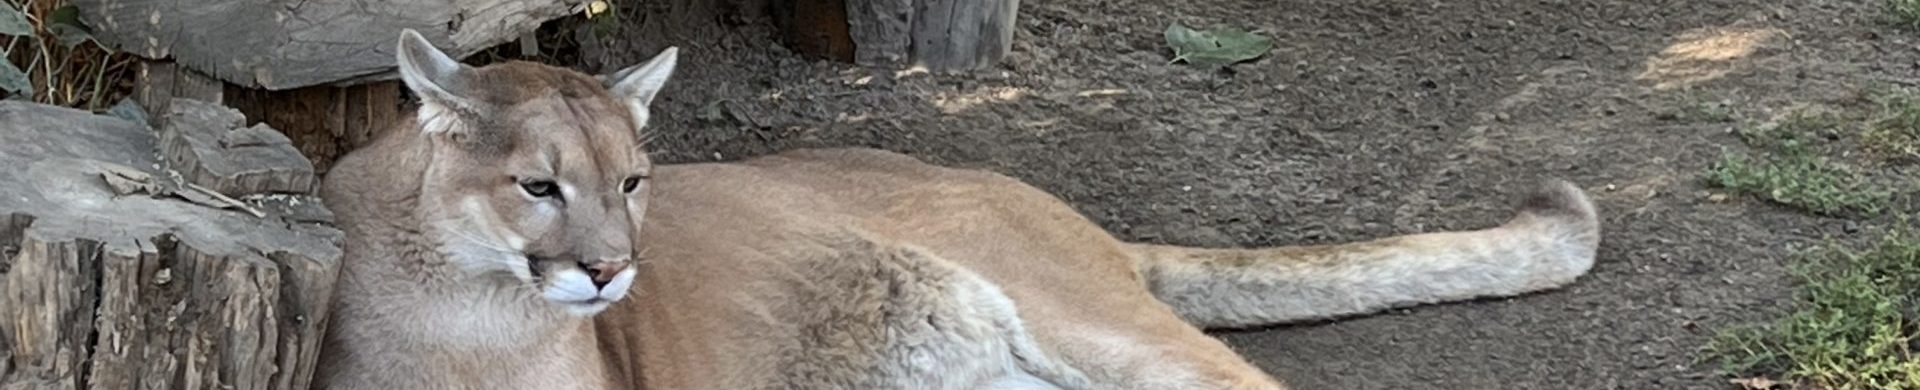 Pumas - Cat Tales Wildlife Center